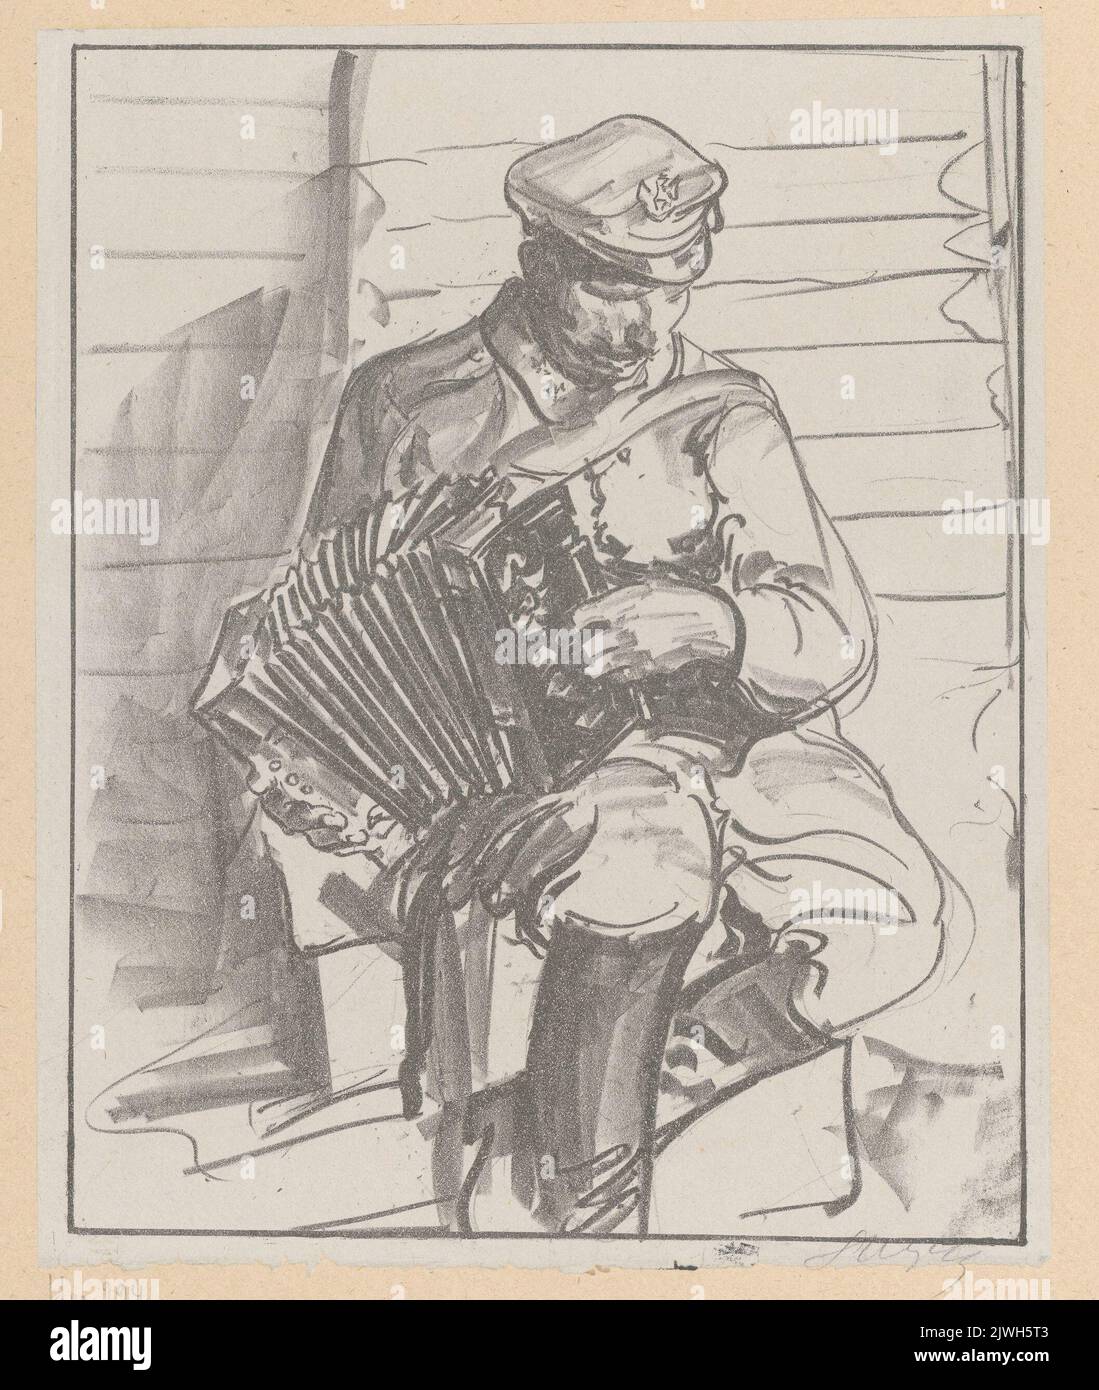 Legion soldier playing the accordion. Wyczółkowski, Leon (1852-1936), graphic artist Stock Photo